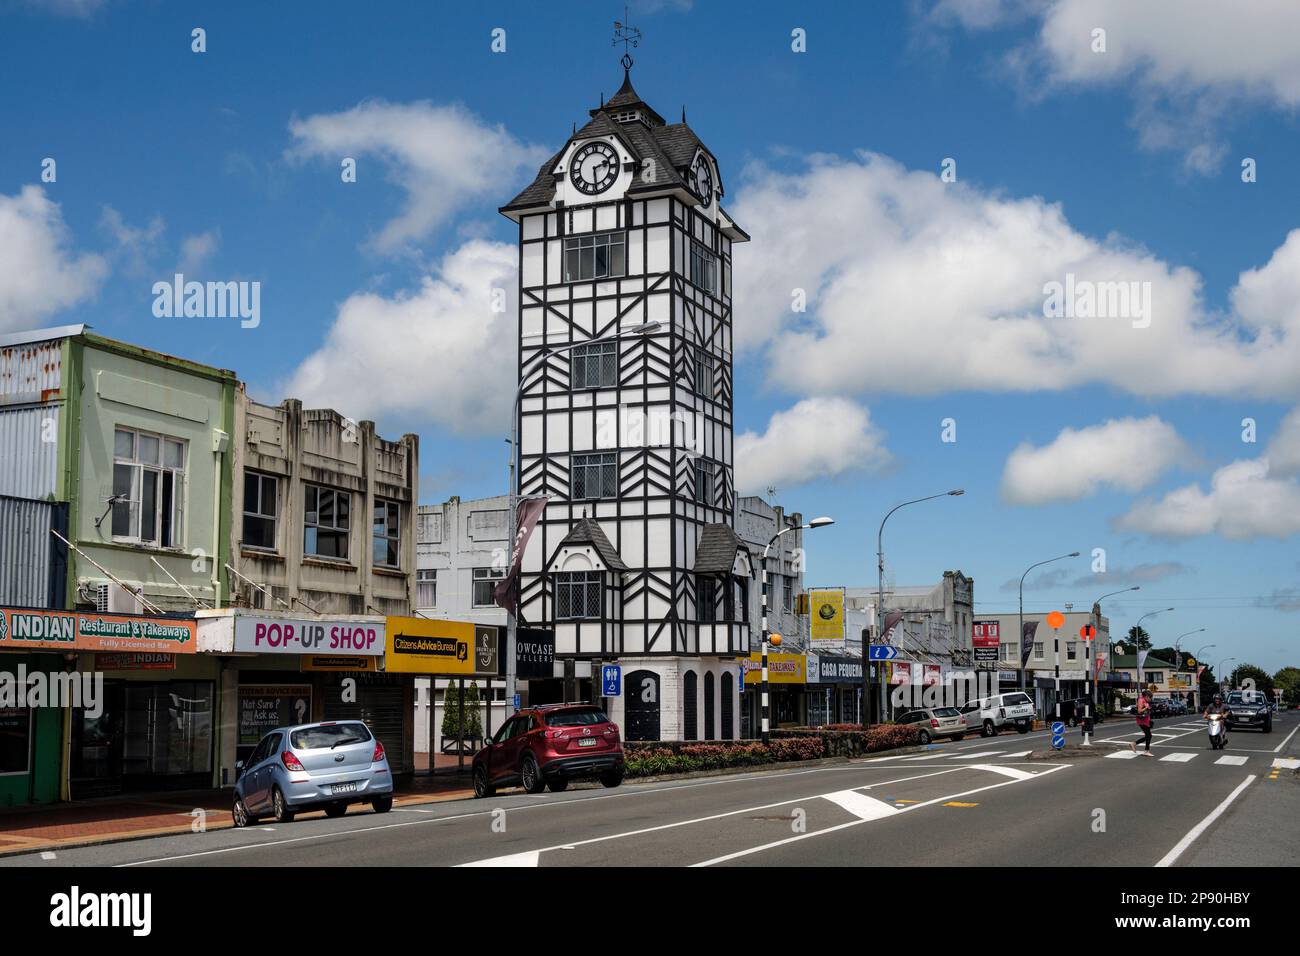 The Glockenspiel Clock Tower in Stratford, North Island, New Zealand Stock Photo